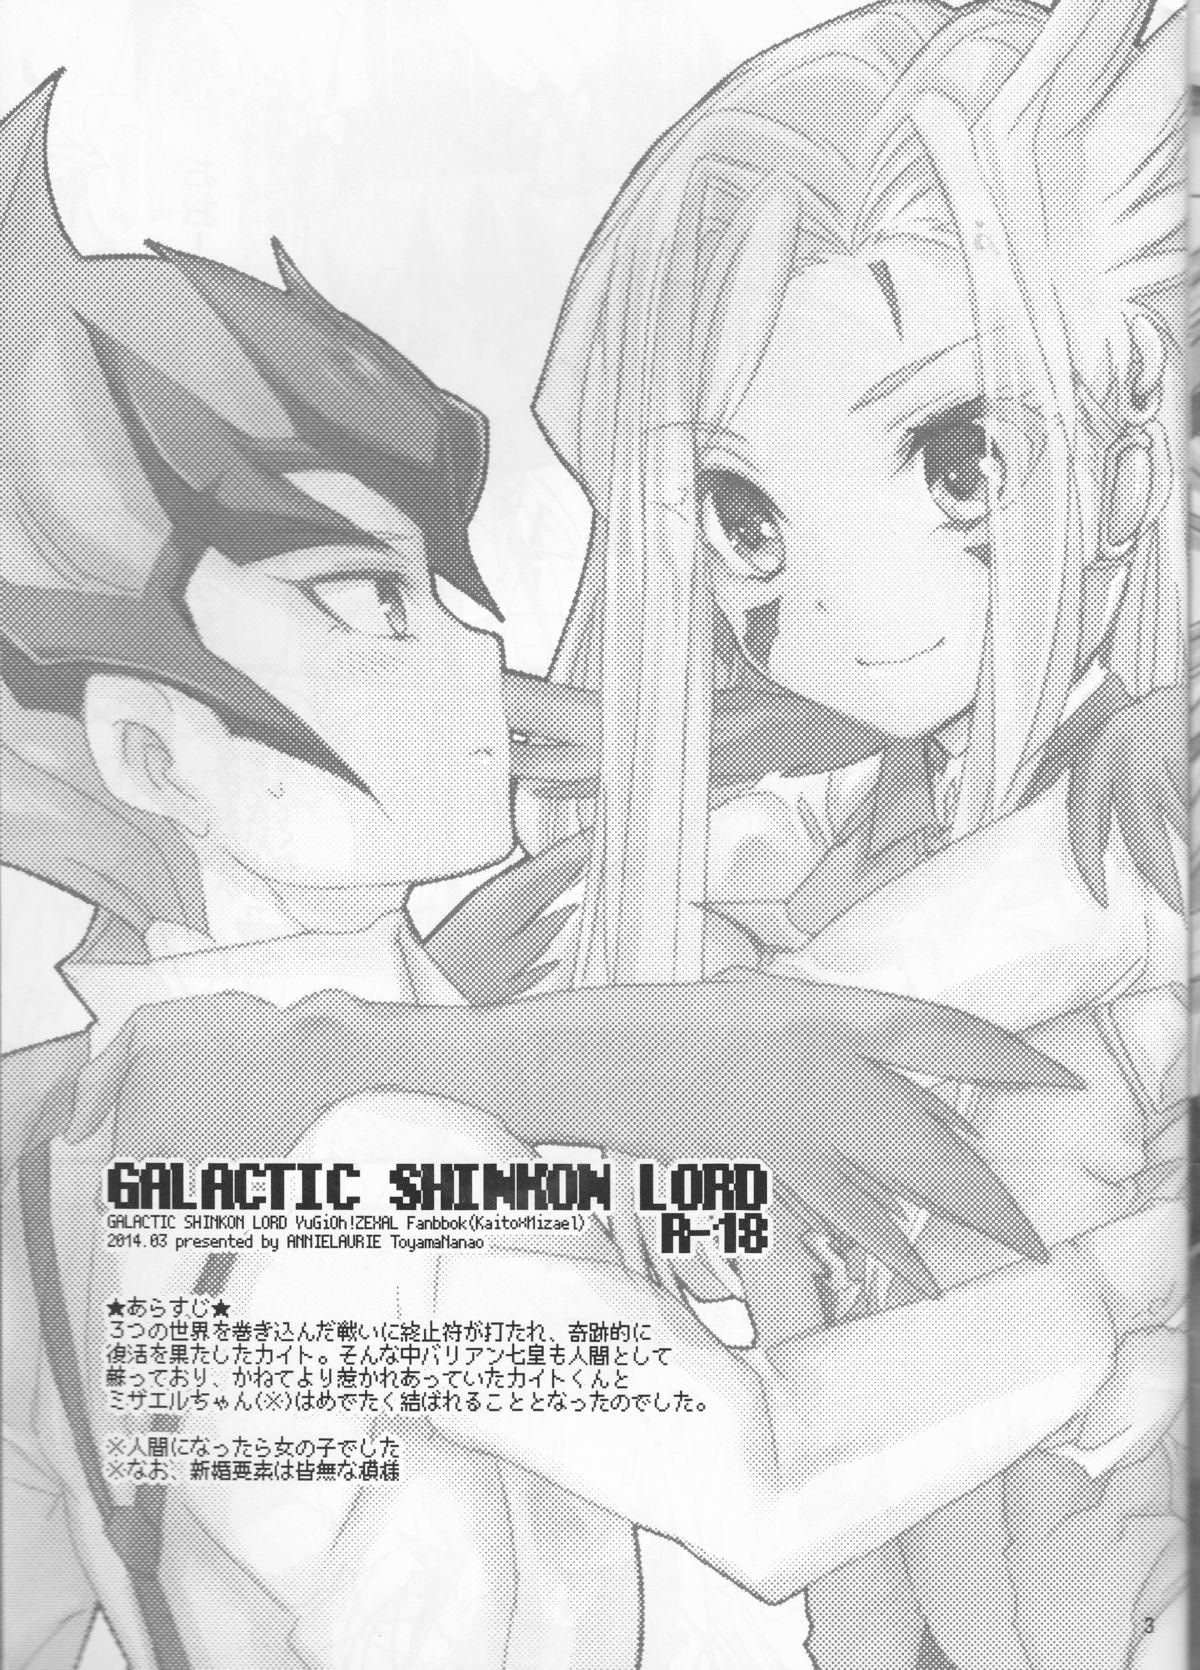 Celeb GALACTIC SHINKON LORD - Yu gi oh zexal Workout - Page 4